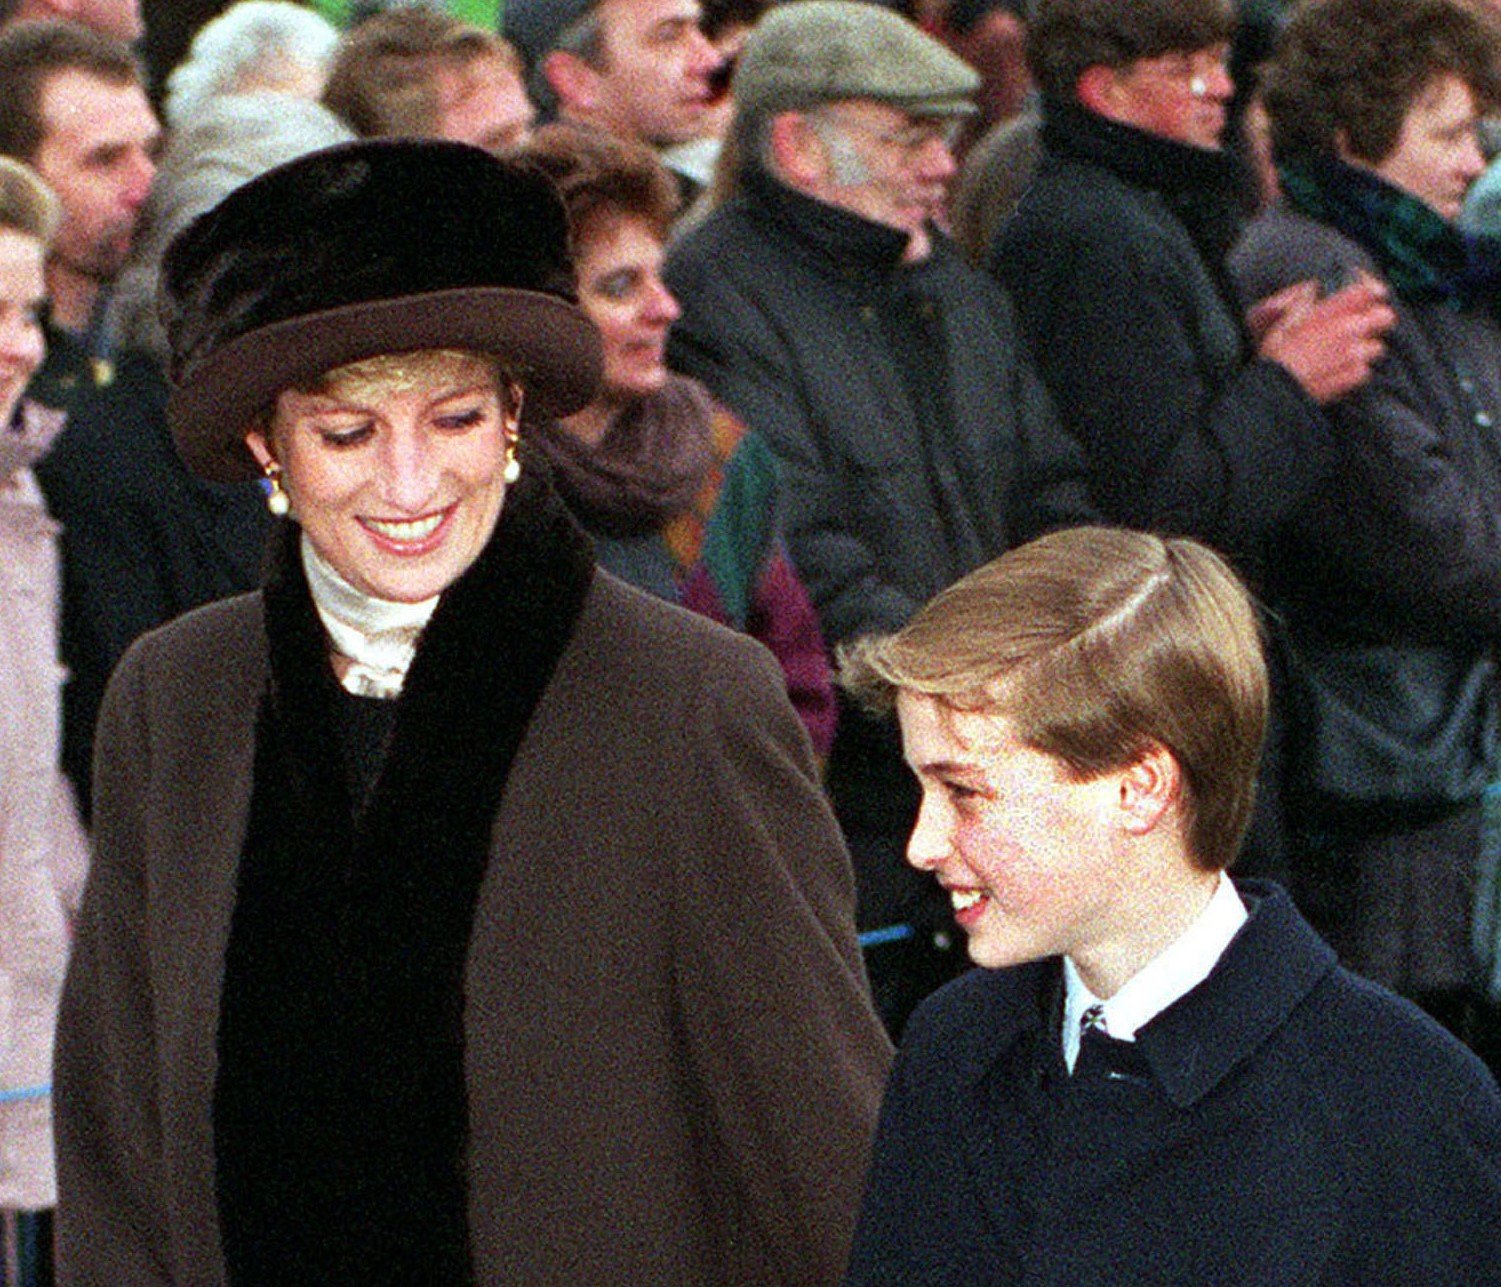 Princess Diana and Prince William